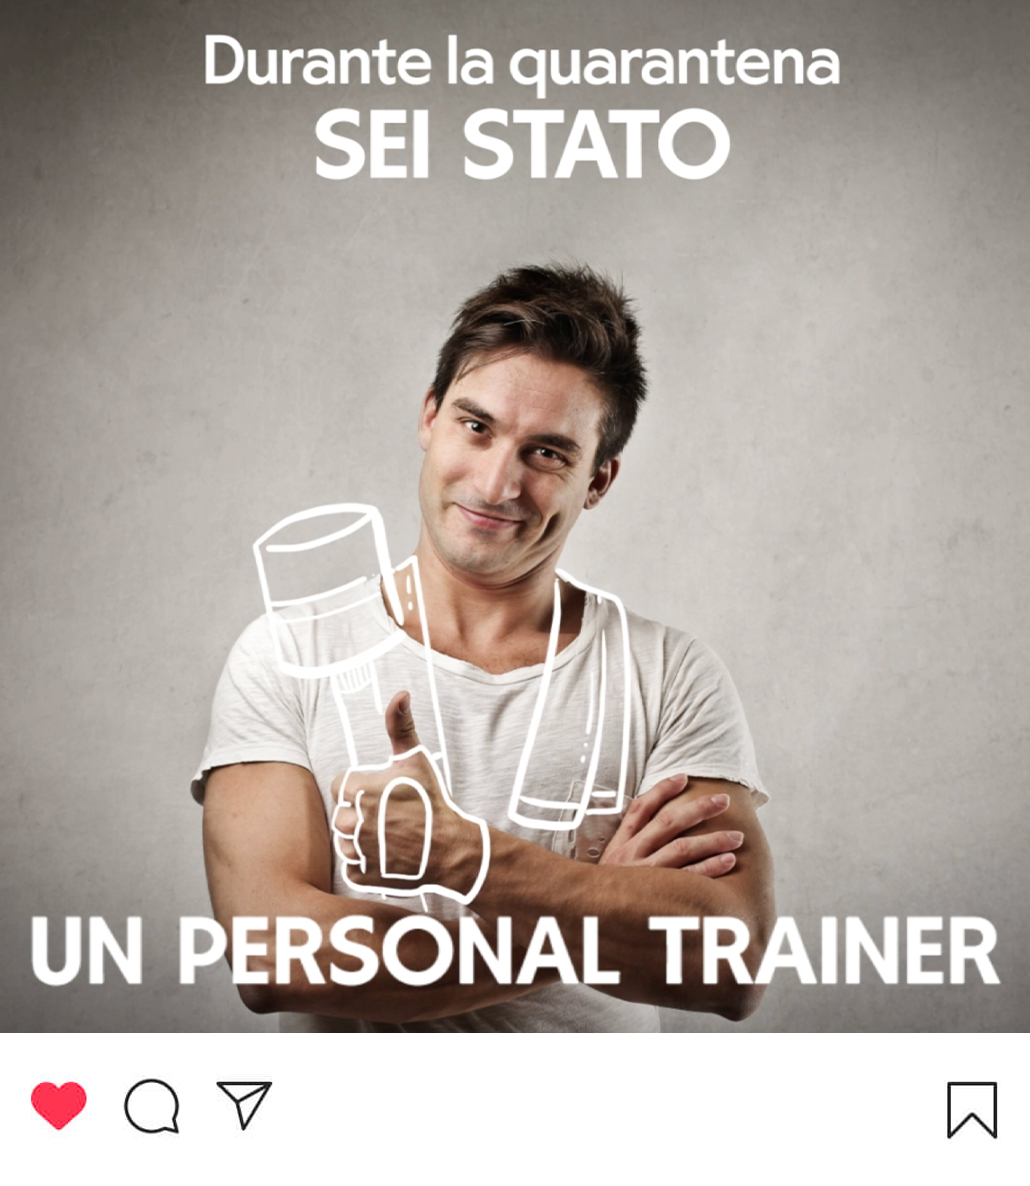 Campagna di sensibilizzazione social per Uretek: un personal trainer.